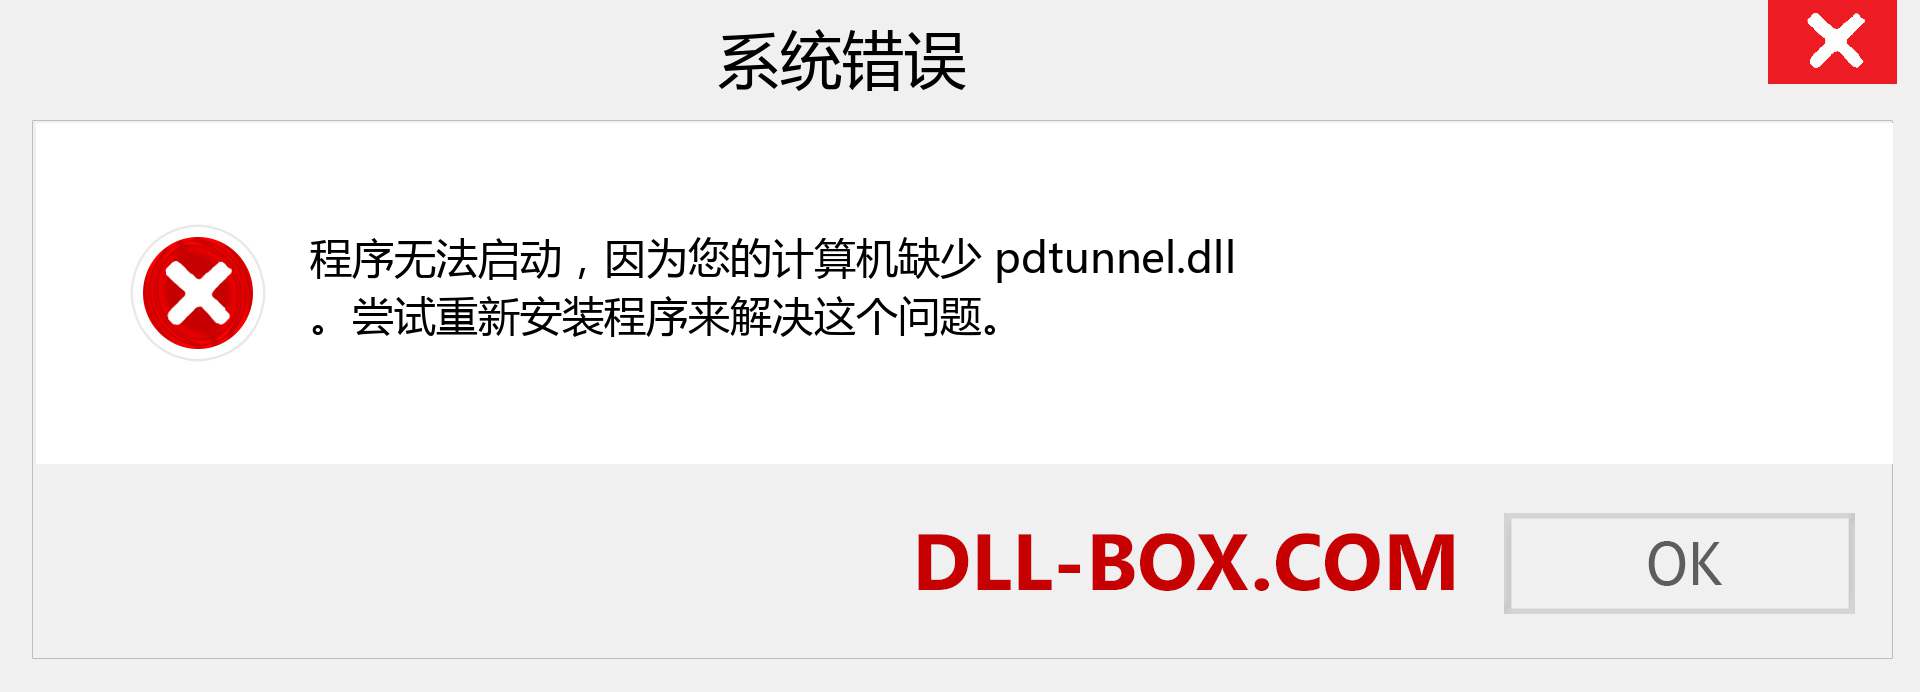 pdtunnel.dll 文件丢失？。 适用于 Windows 7、8、10 的下载 - 修复 Windows、照片、图像上的 pdtunnel dll 丢失错误